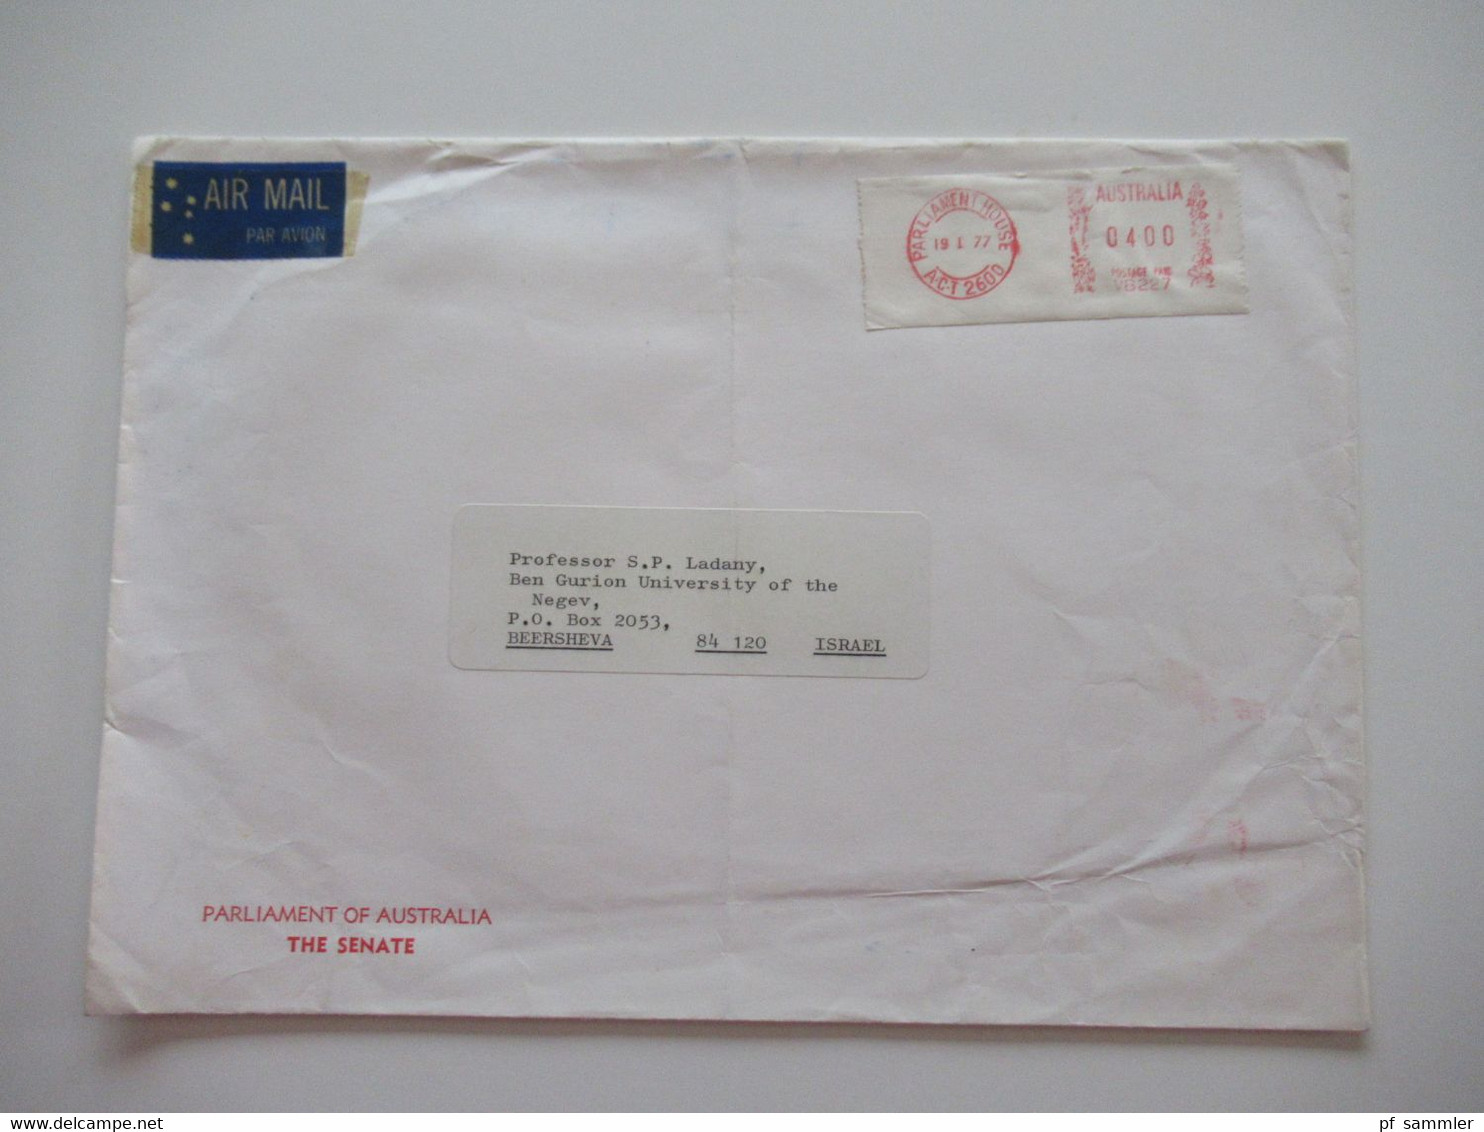 Australien 1977 Air Mail Nach Israel Umschlag Parliament Of Australia The Senate Postage Paid Parliament House ACT 2600 - Briefe U. Dokumente